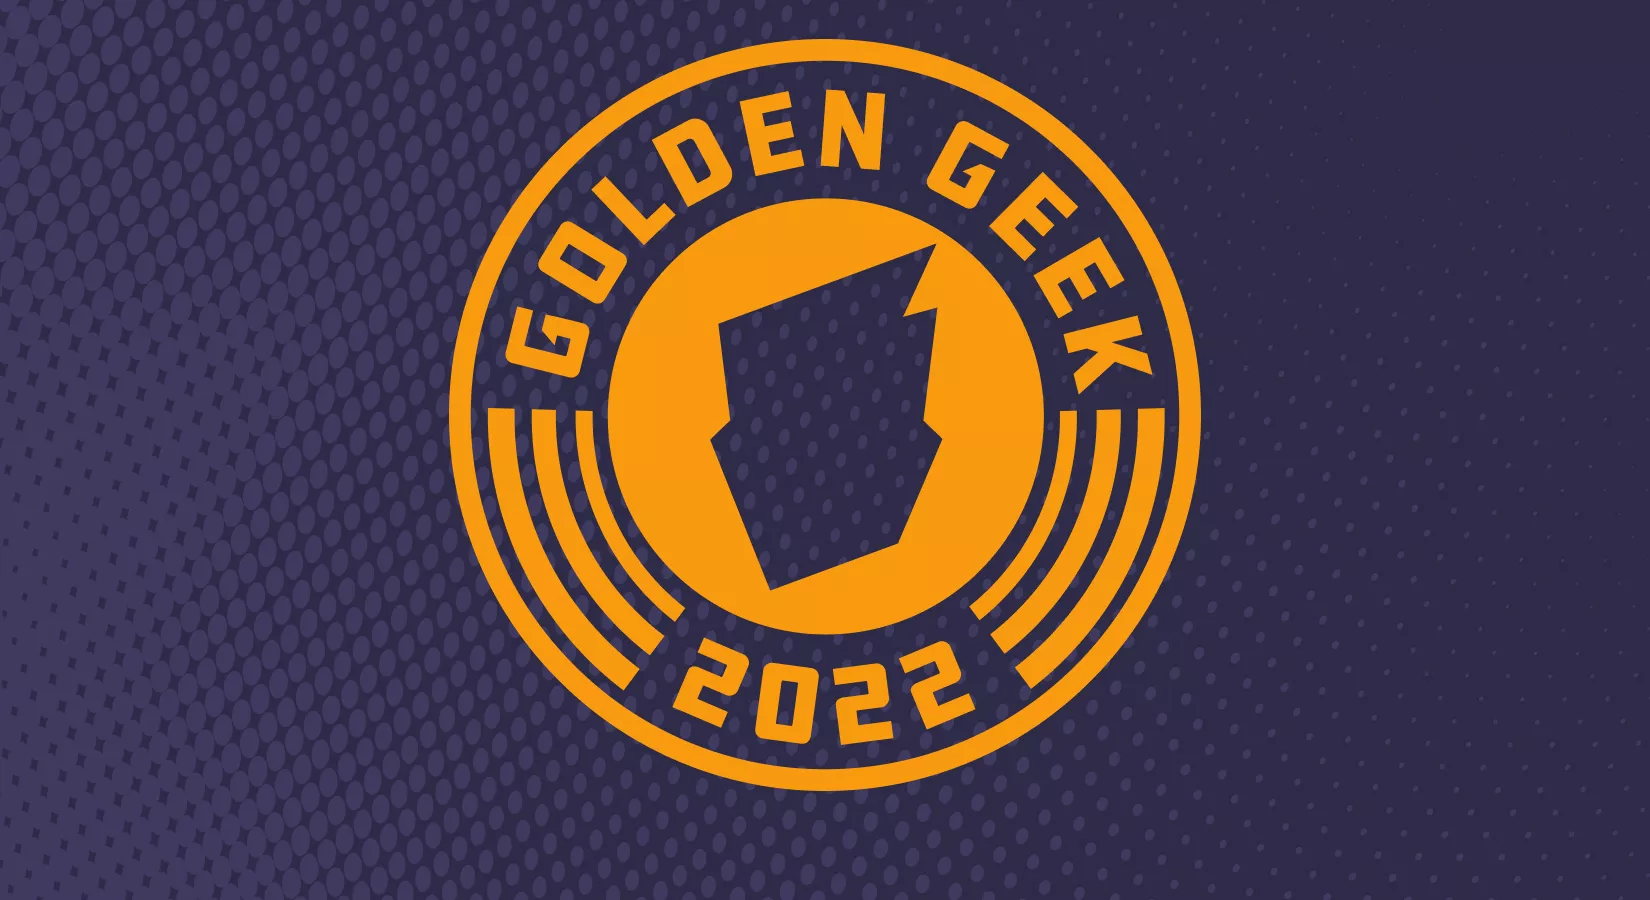 Logo for the 2022 BoardGameGeek Golden Geek Awards